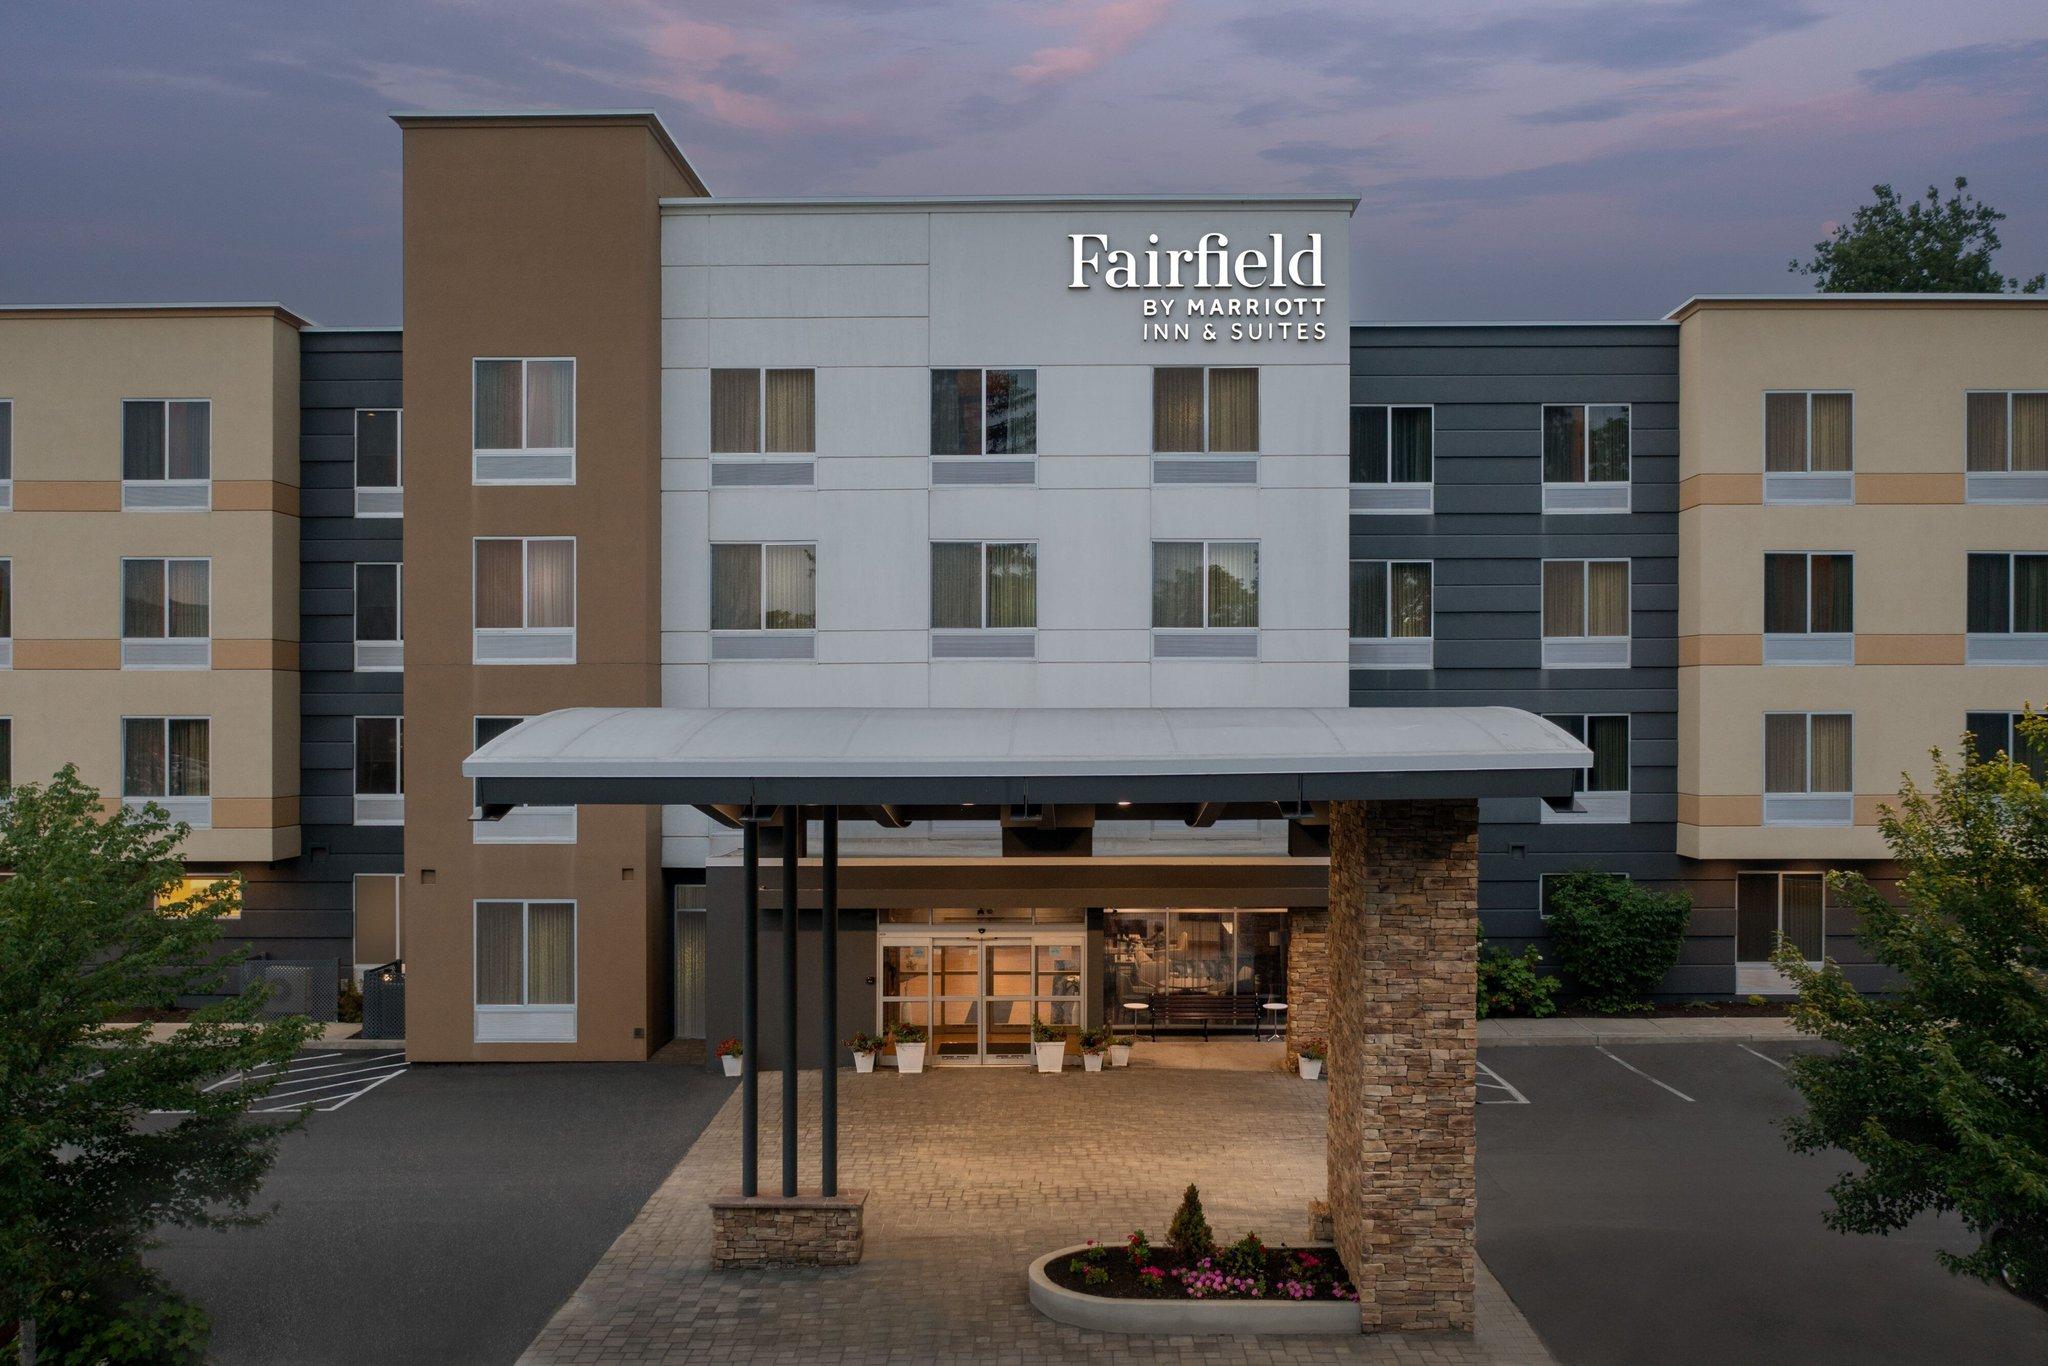 Fairfield Inn & Suites Ithaca in Ithaca, NY